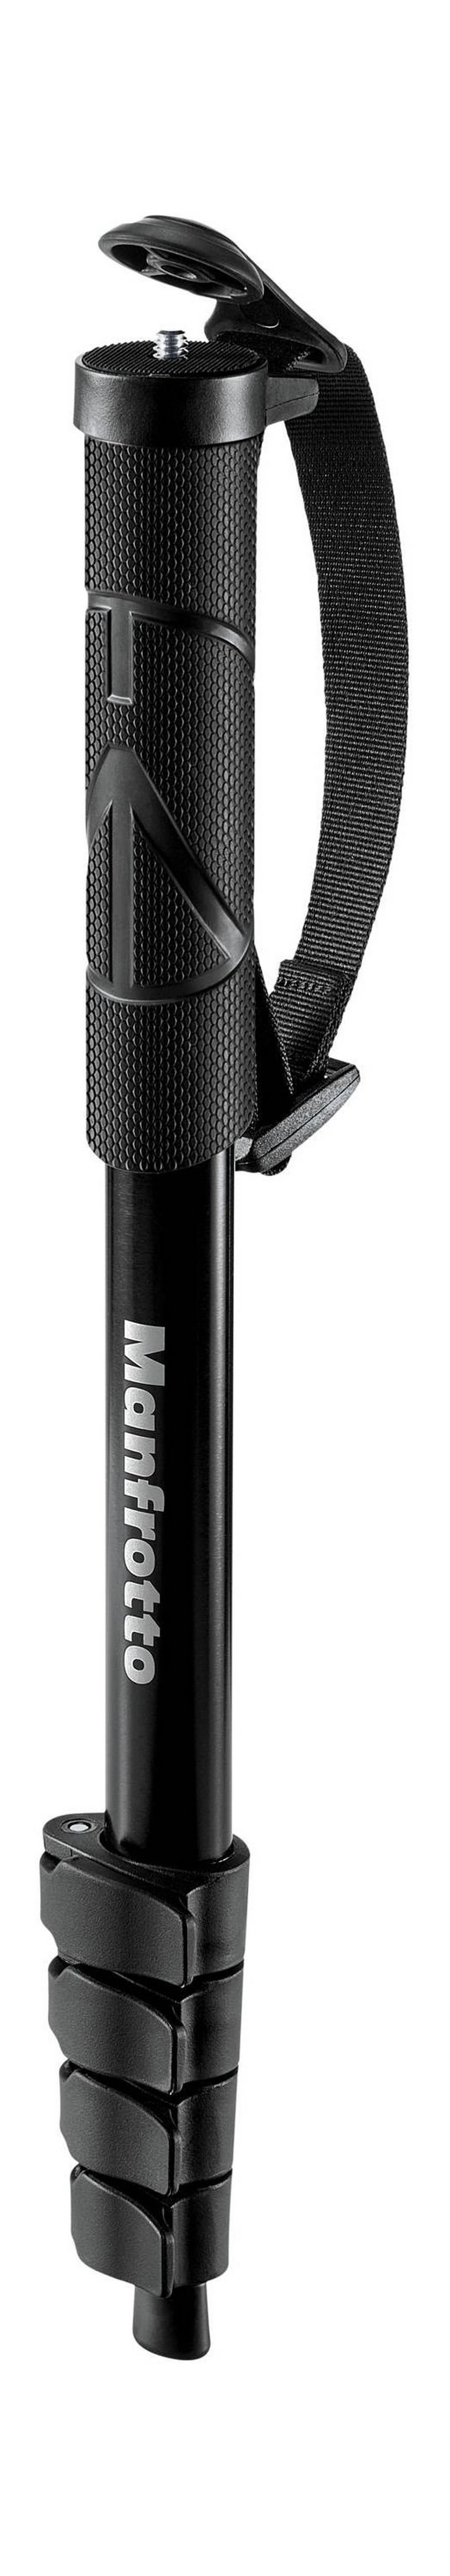 Manfrotto Compact 145.5cm Aluminum Monopod (MMCOMPACT-BK) - Black